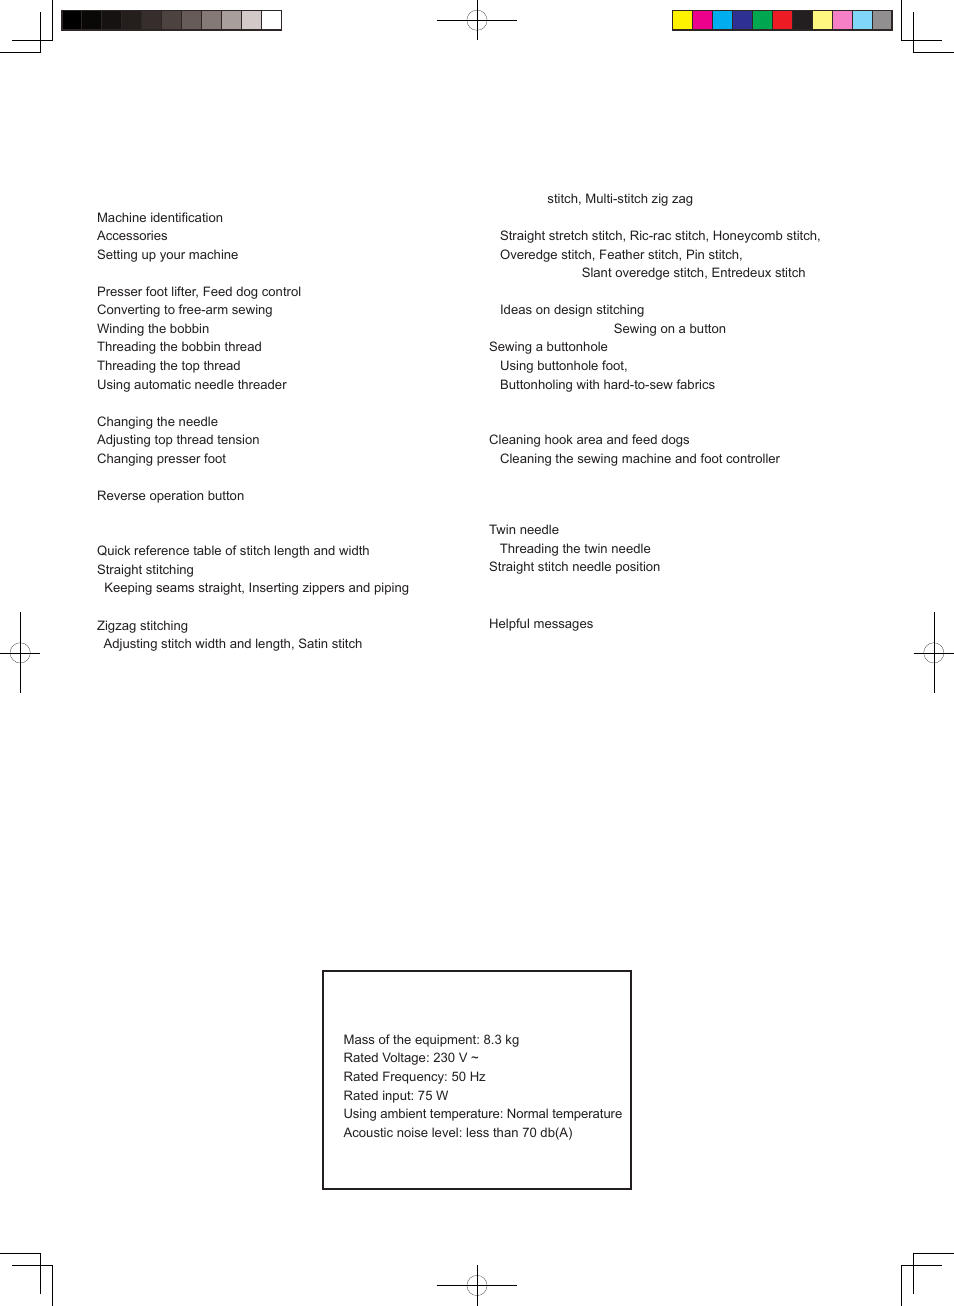 SINGER 8768 HERITAGE User Manual | Page 5 / 60